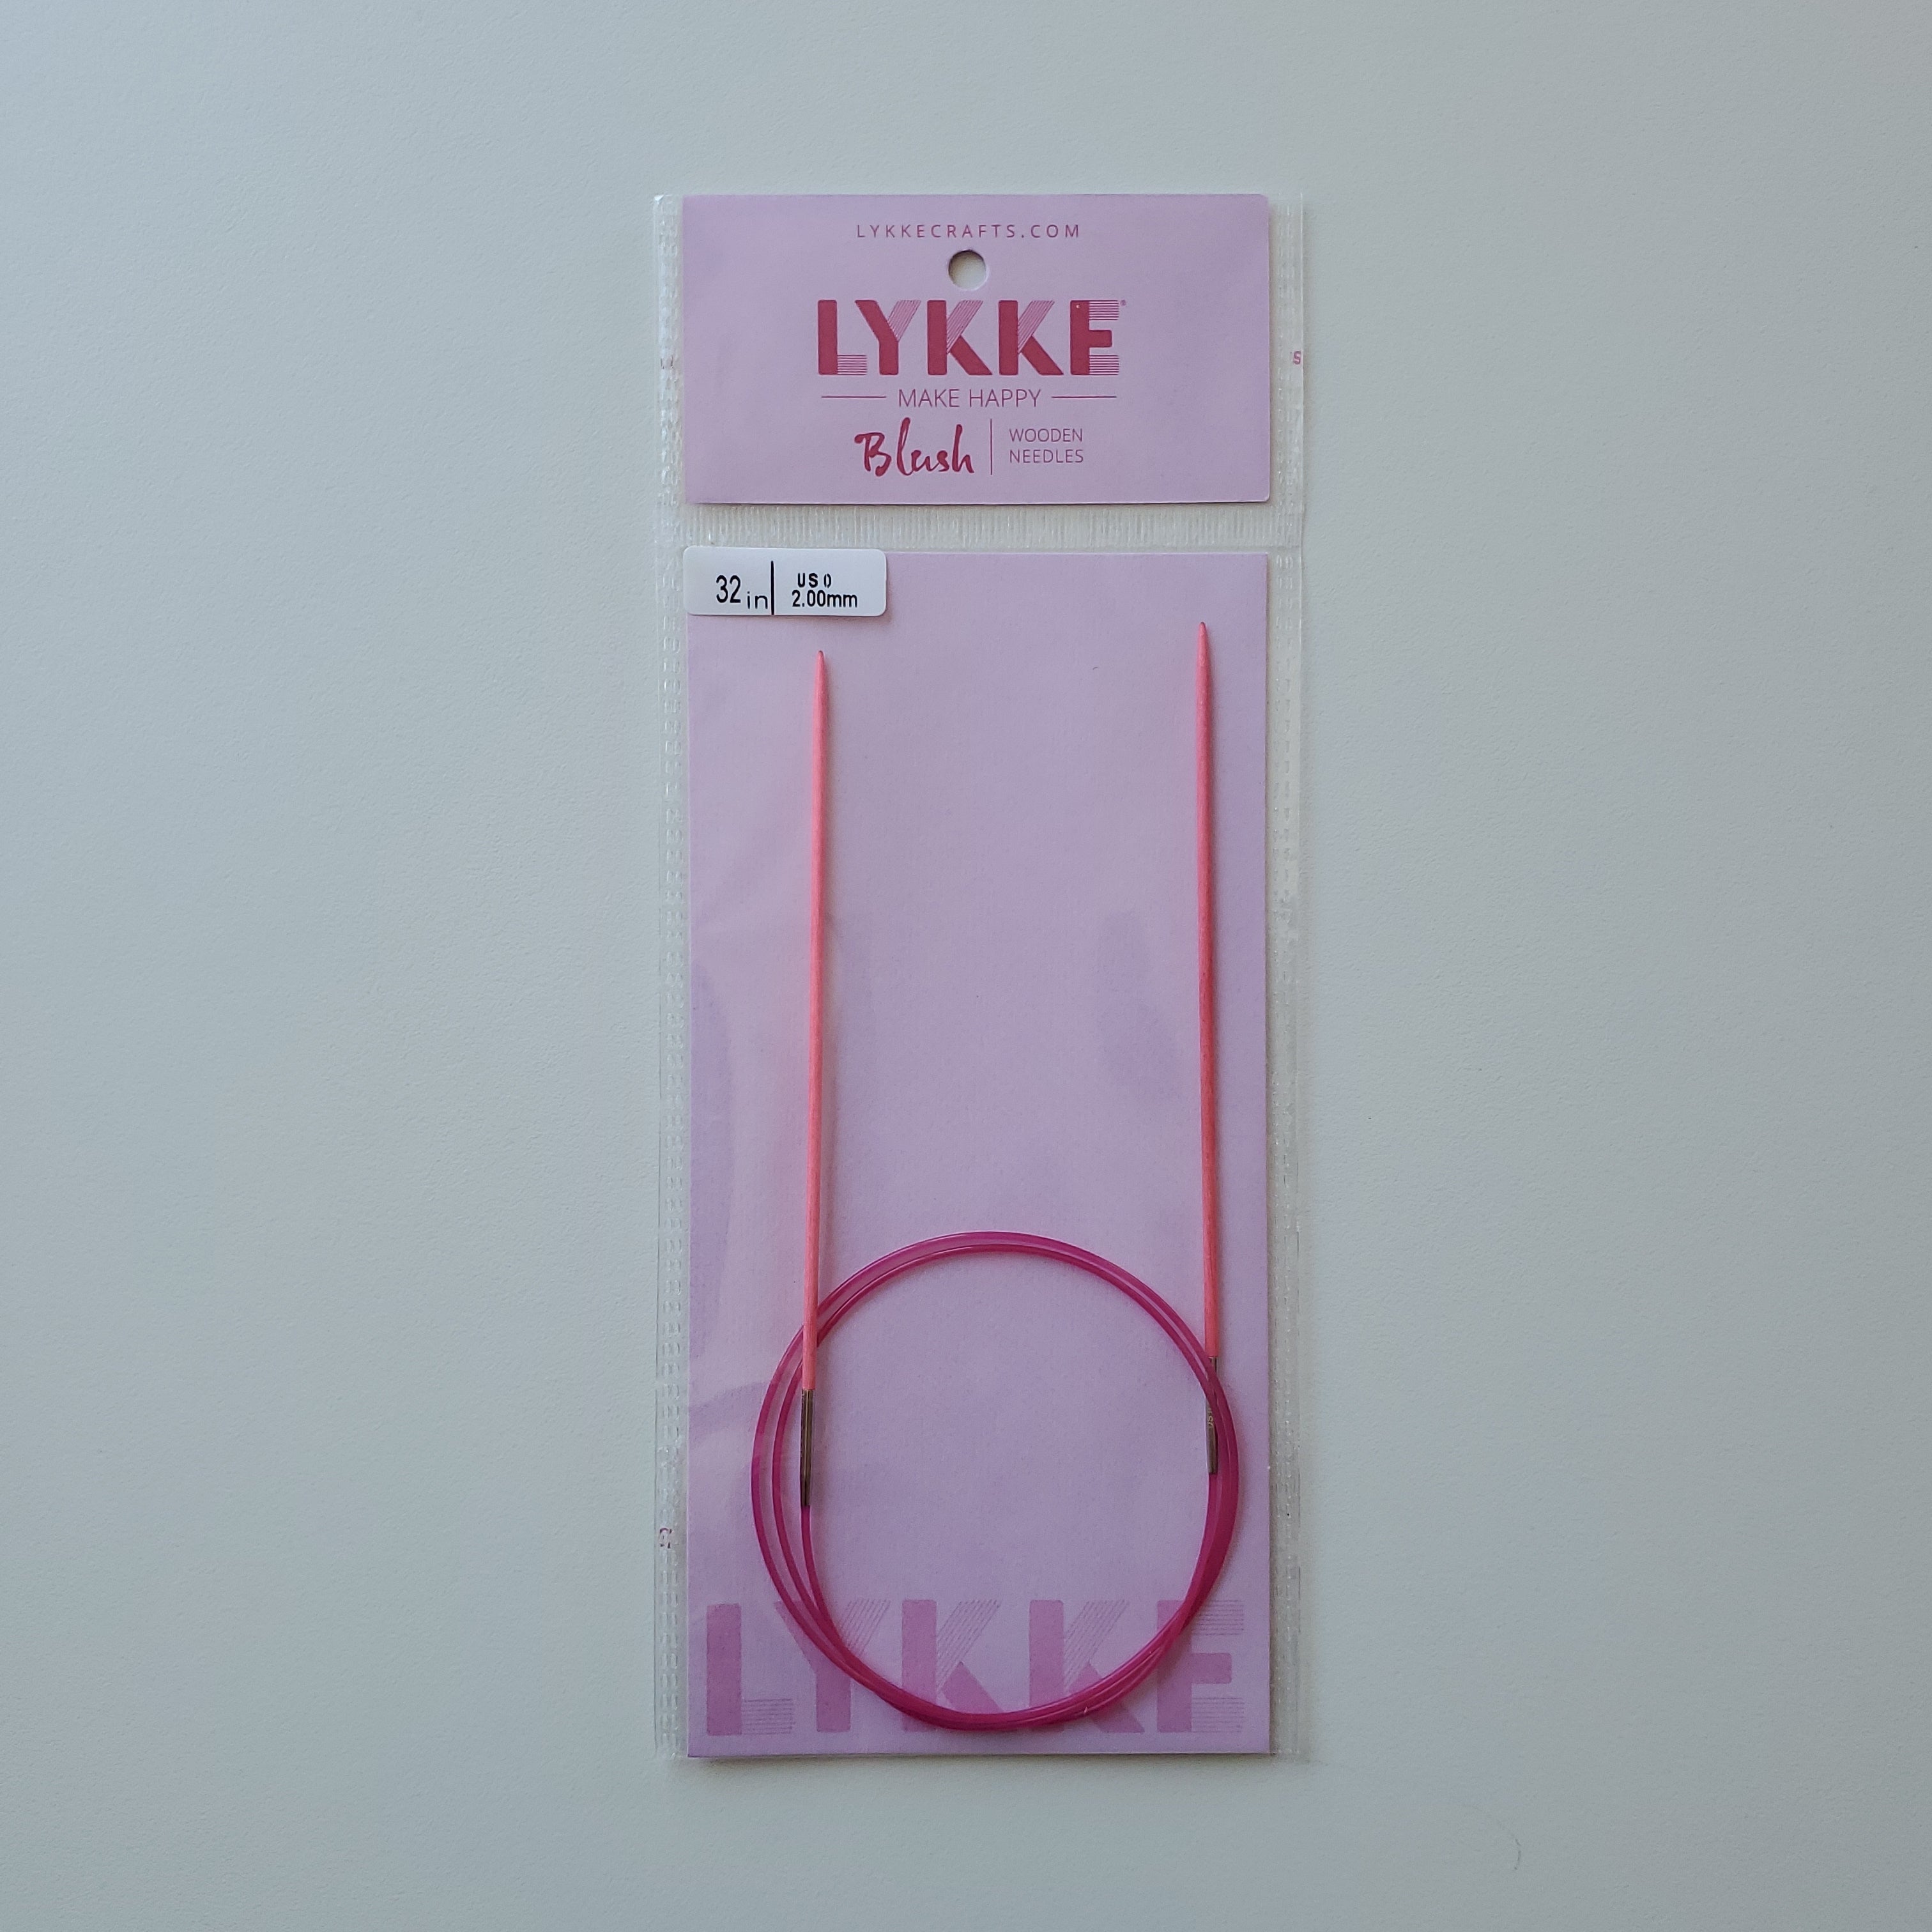 LYKKE 付け替え式輪針セット 12cm BLUSHハンドメイド - 生地/糸